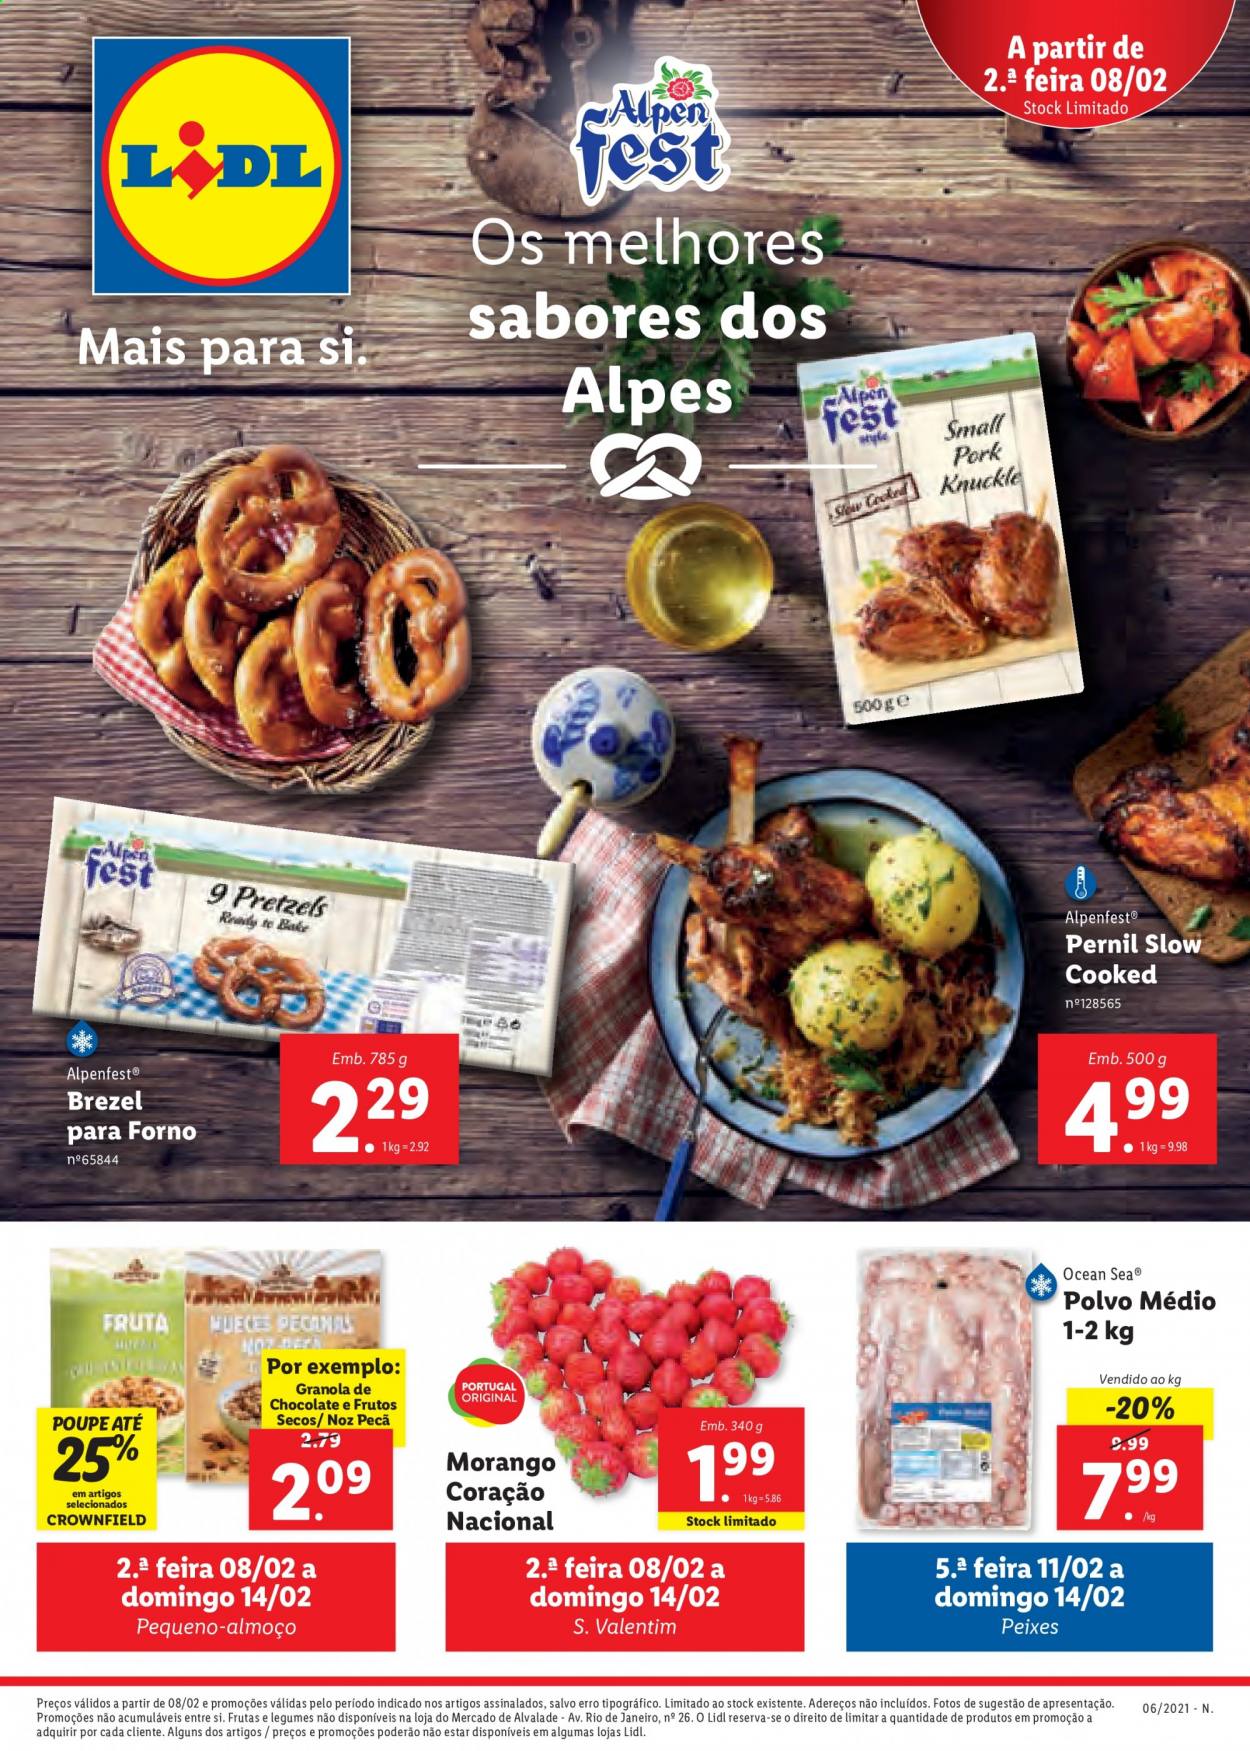 thumbnail - Folheto Lidl - 8.2.2021 - 14.2.2021 - Produtos em promoção - morango, legumes, pernil, polvo, peixe, granola. Página 1.